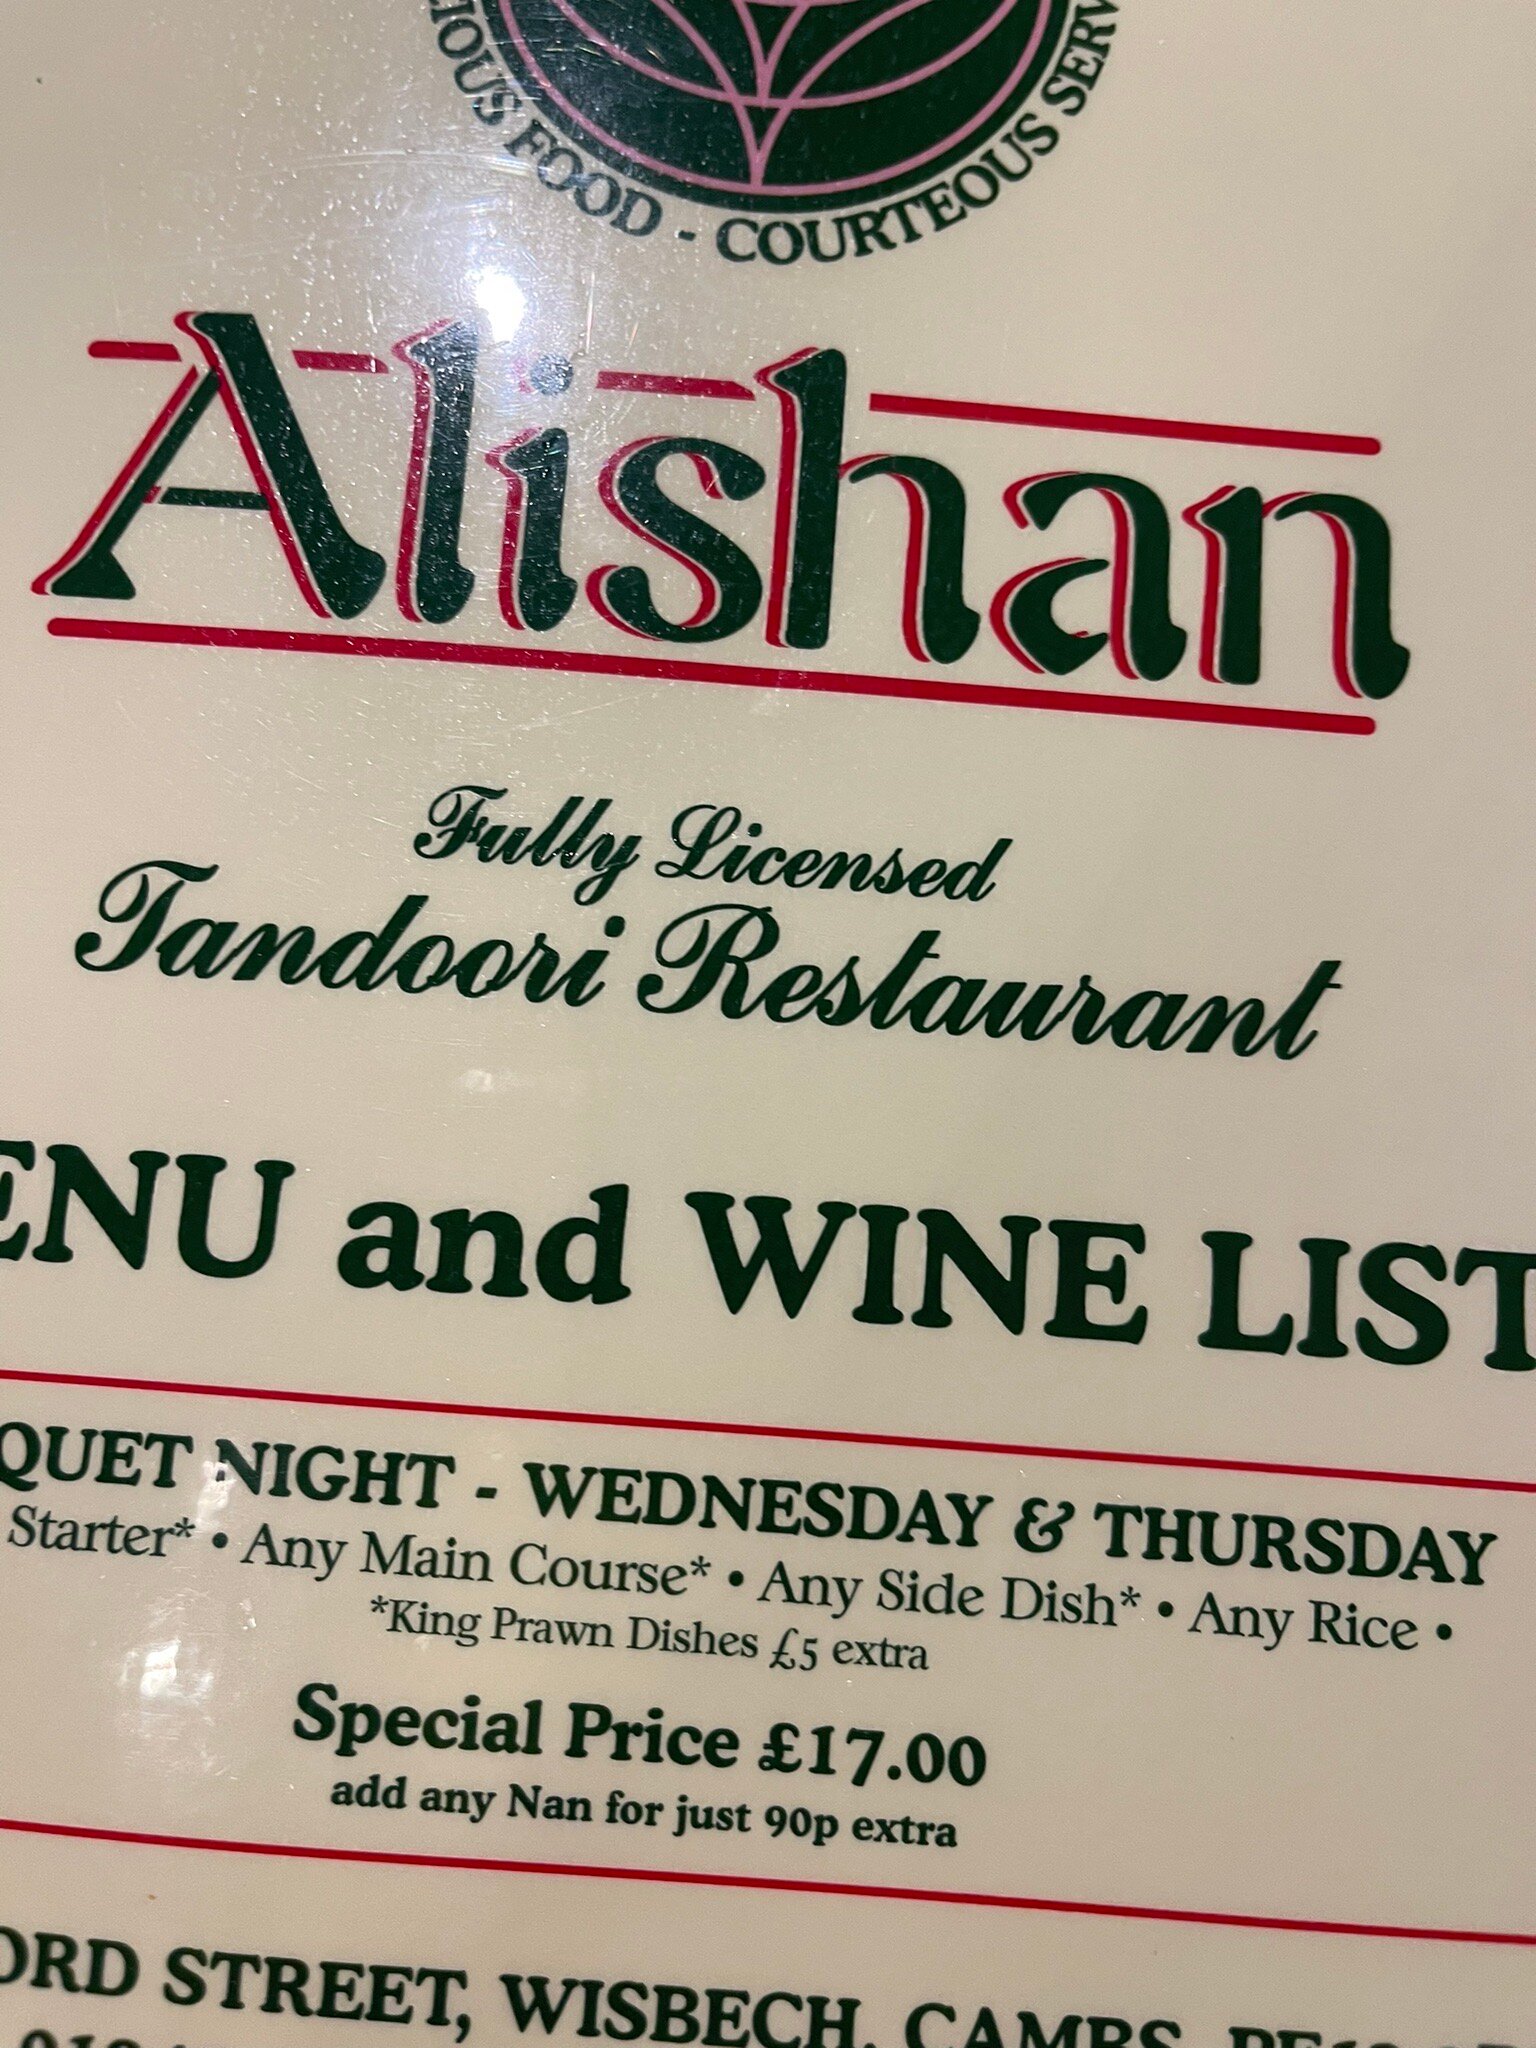 Alishan Indian Restaurant